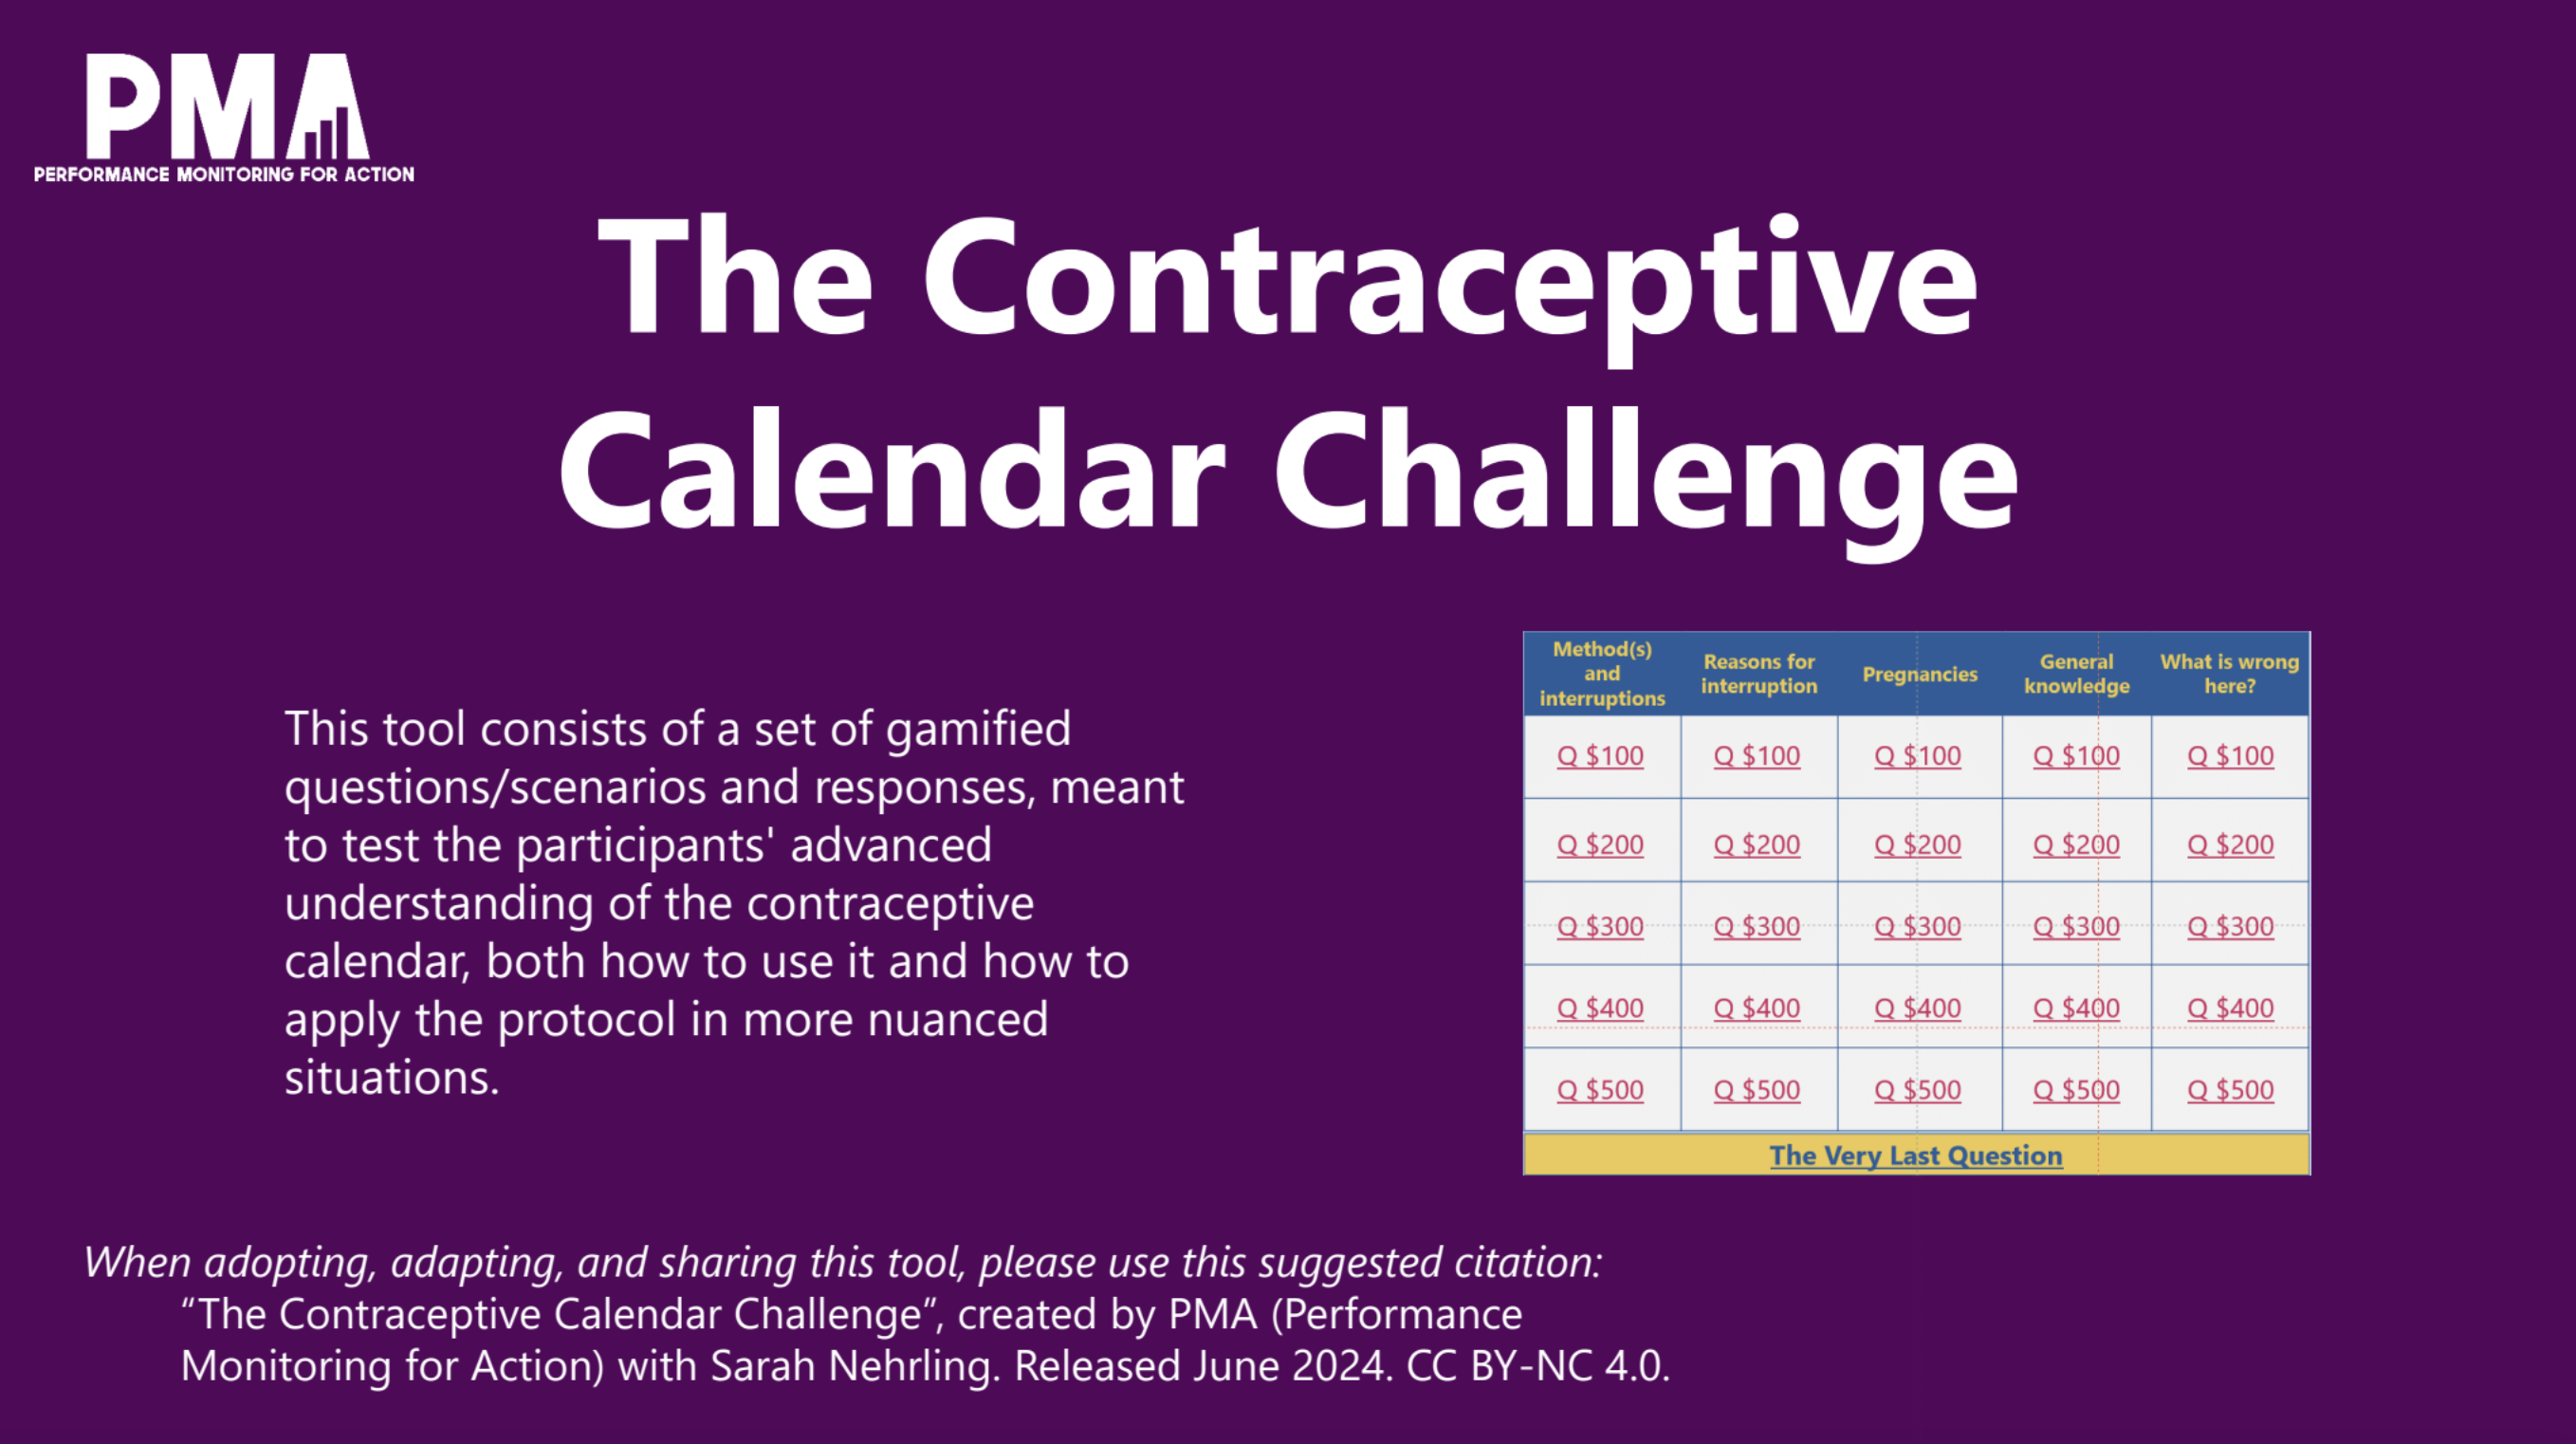 The Contraceptive Calendar Challenge